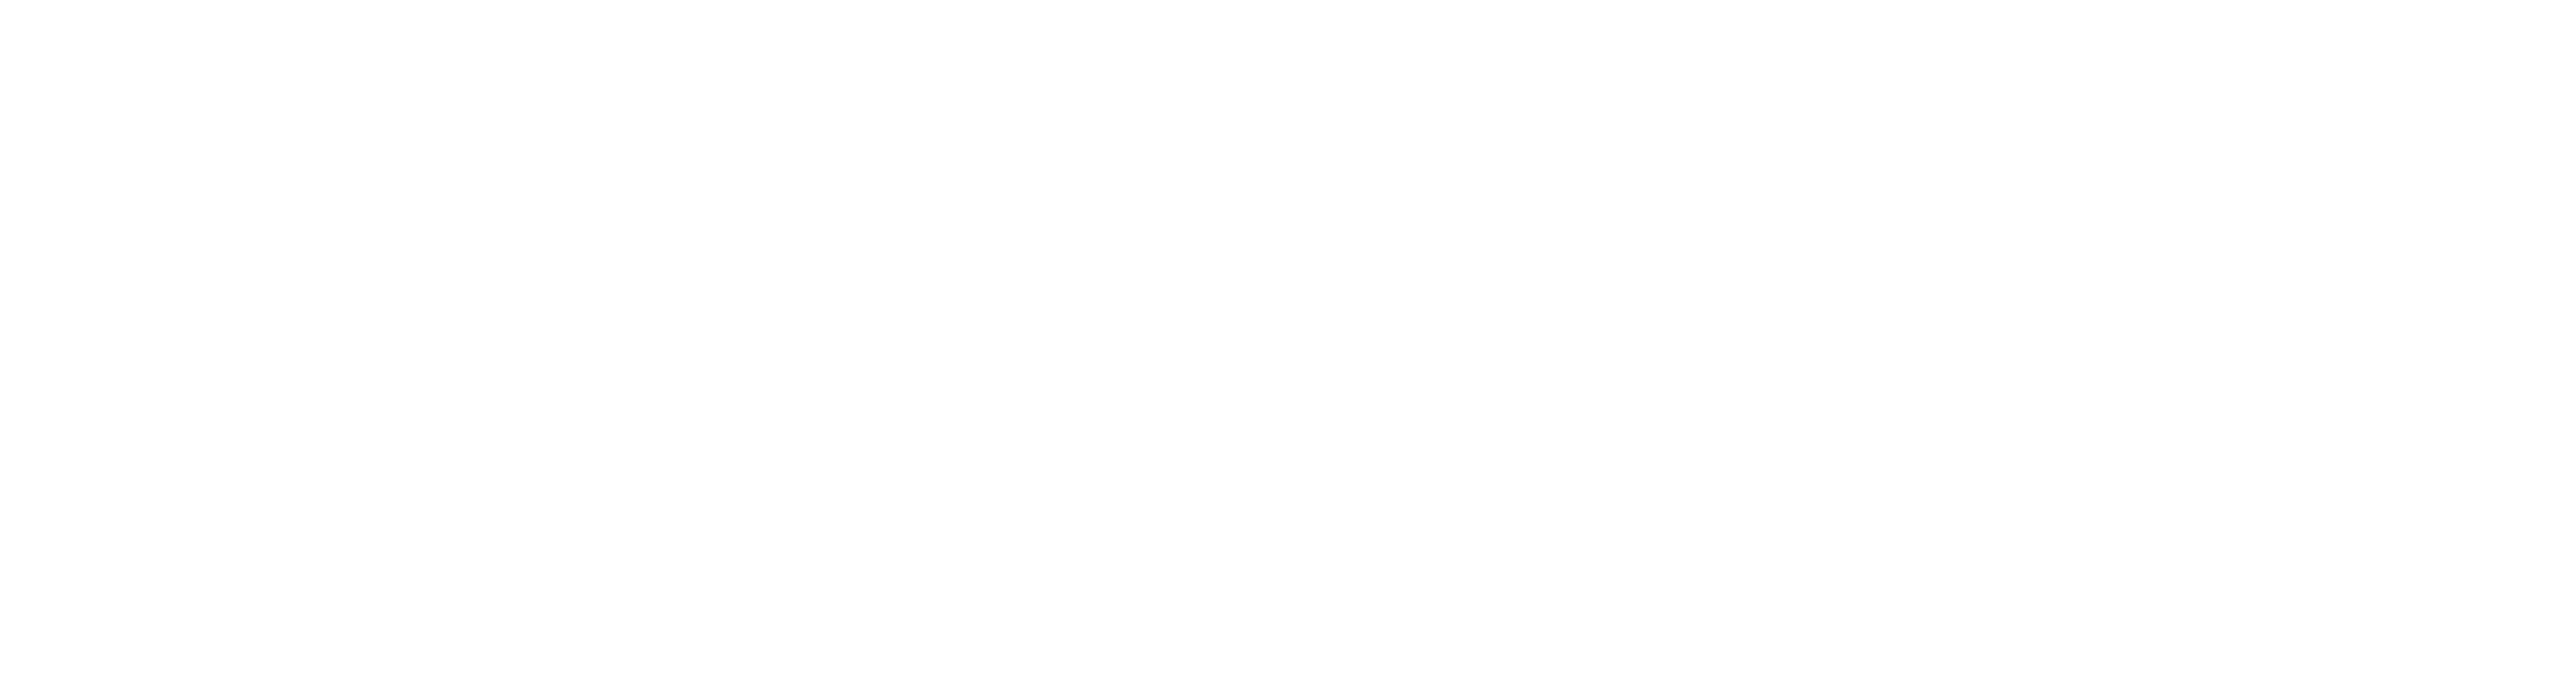 JACK&JONES UNMATCHED